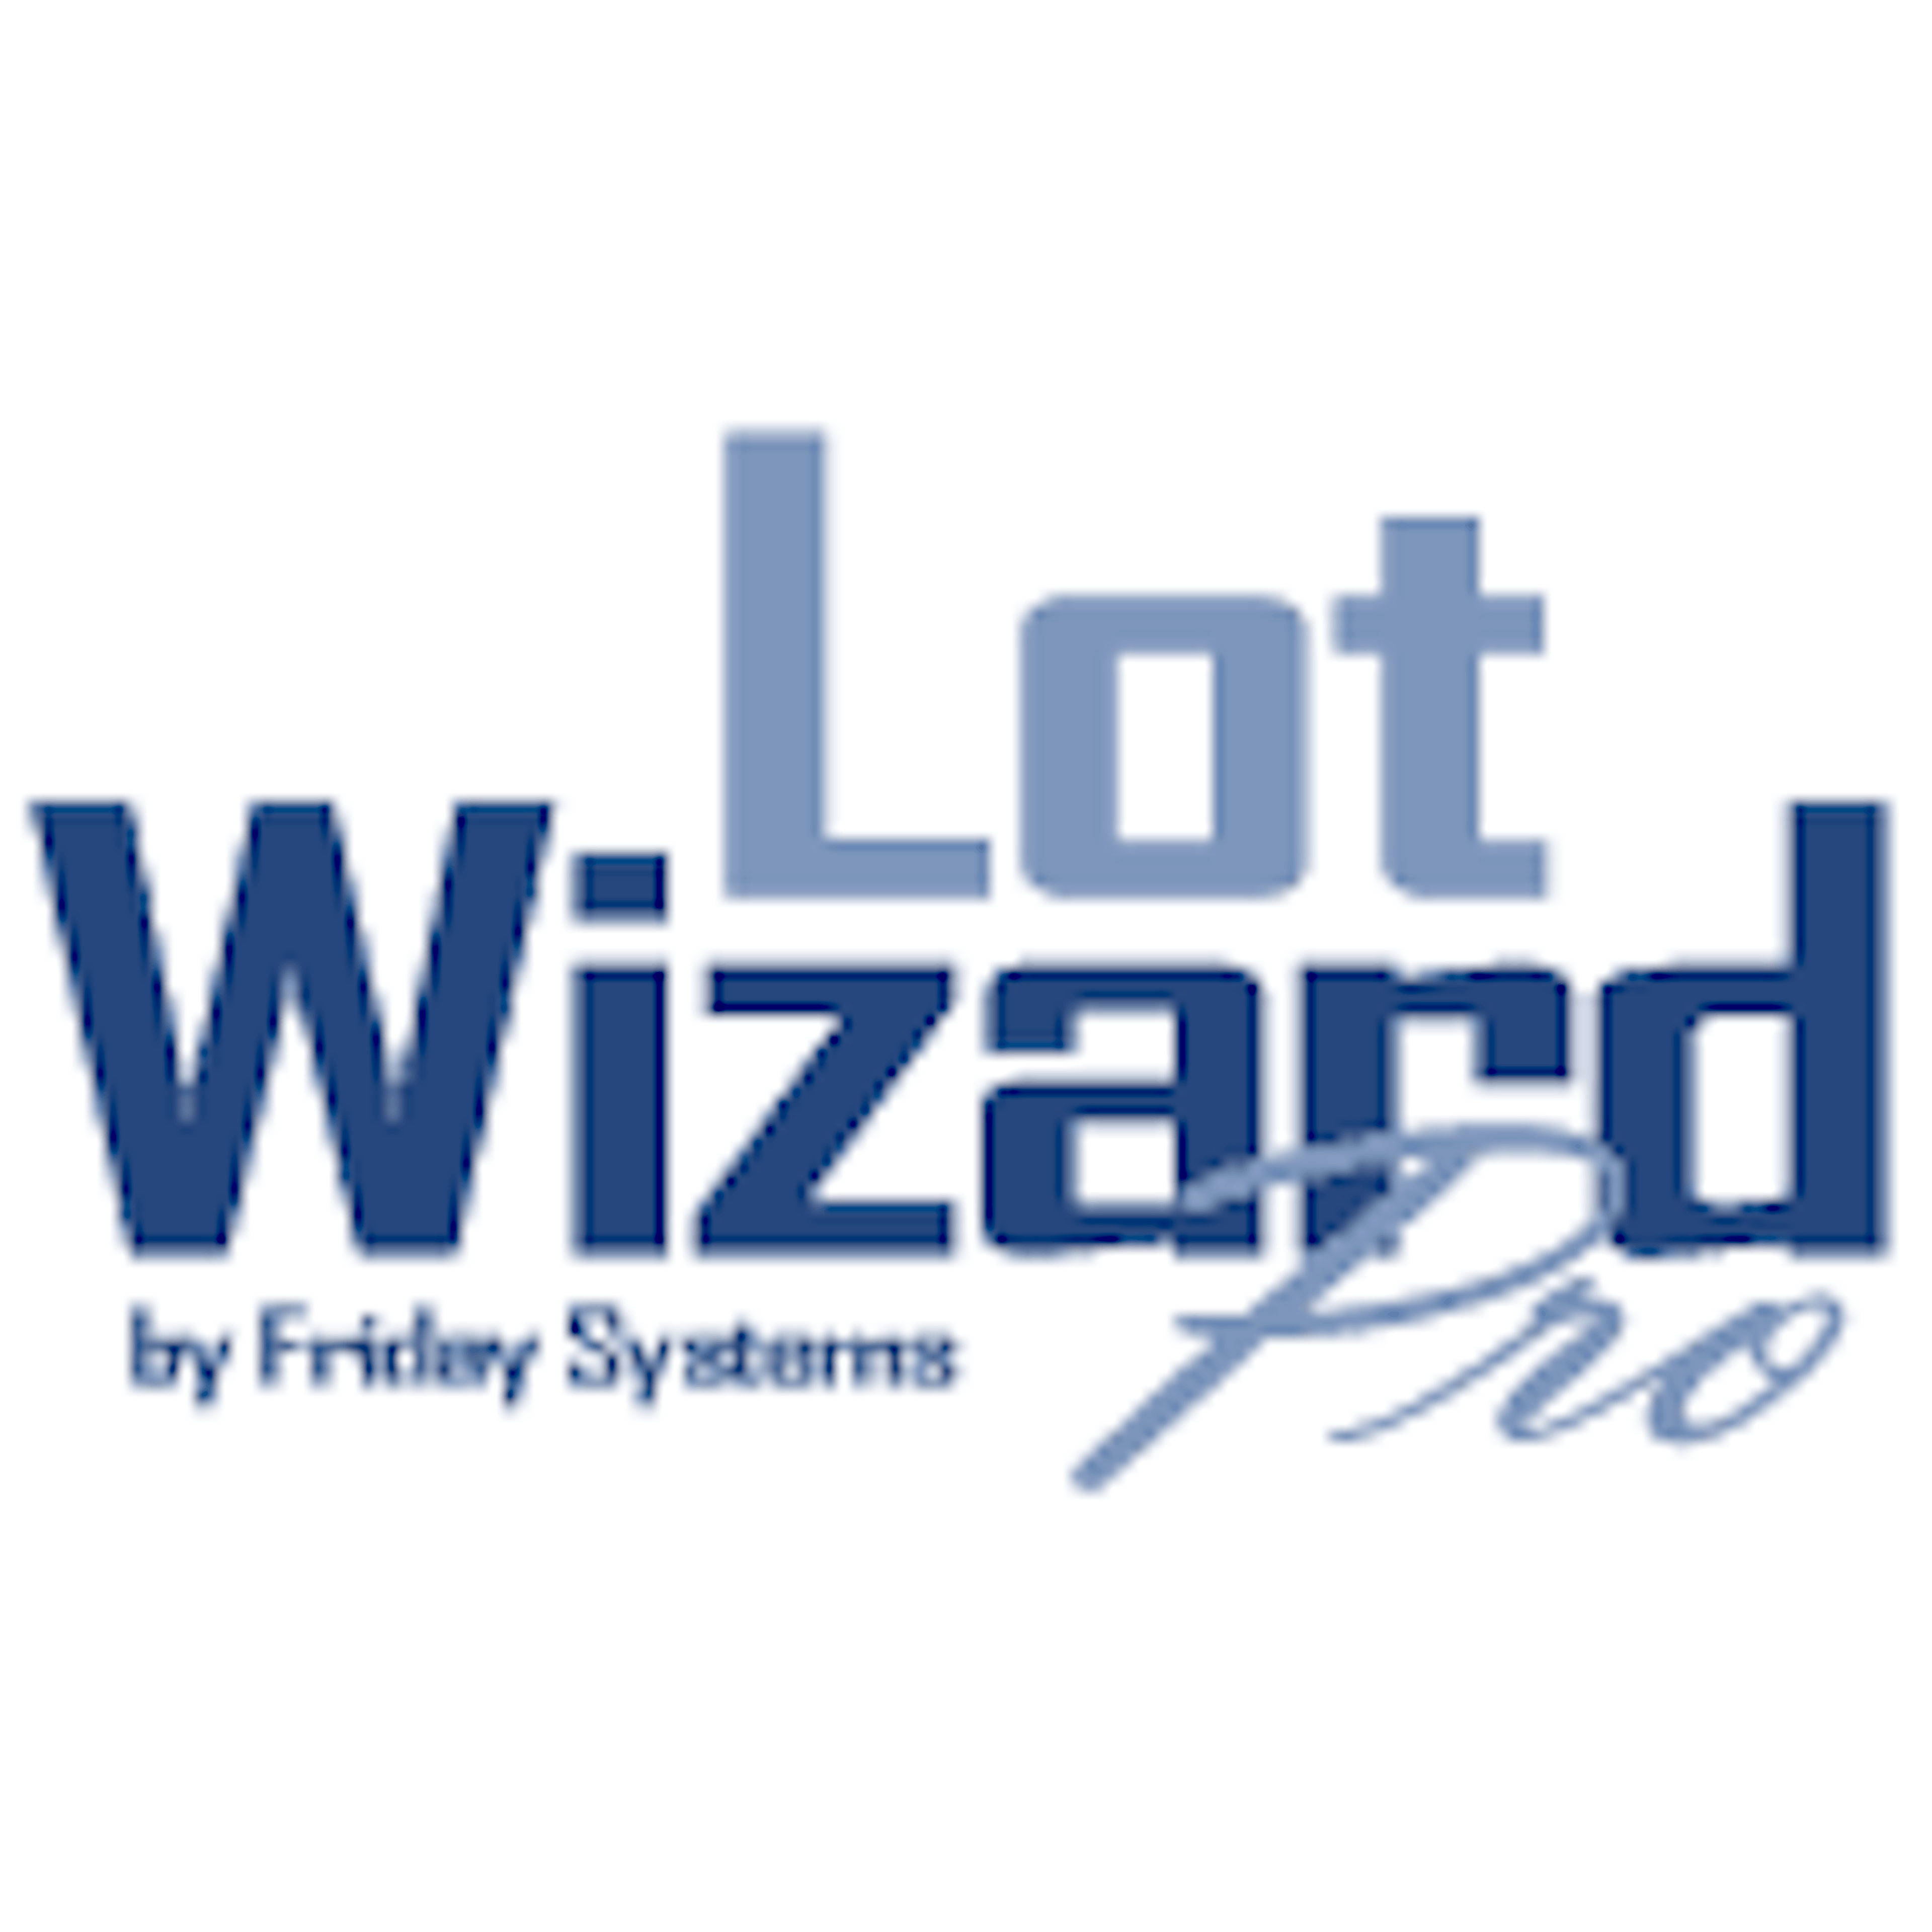 Lot Wizard Pro Logo